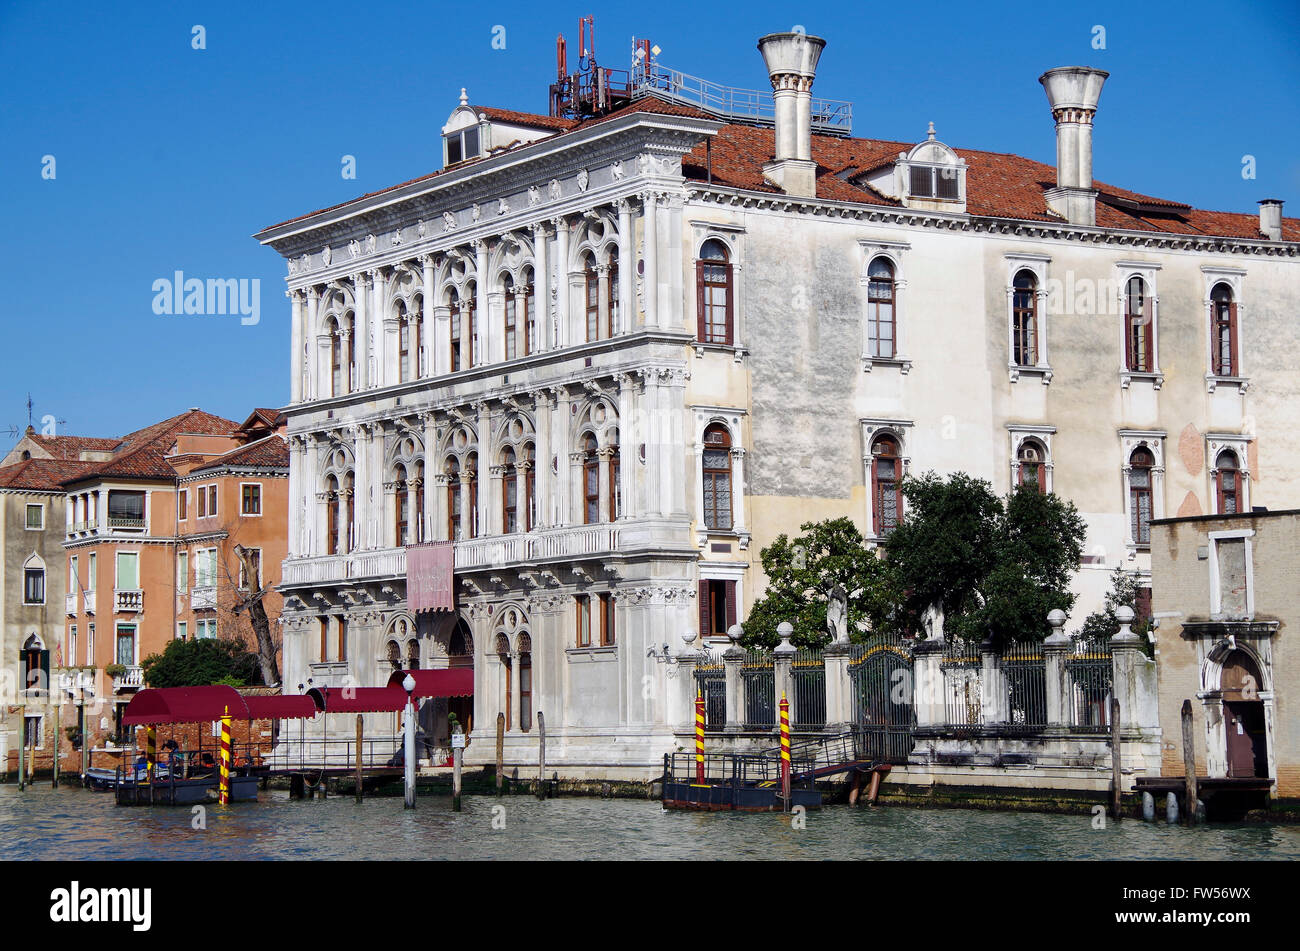 Palazzo vendramin calergi venice hi-res stock photography and images ...